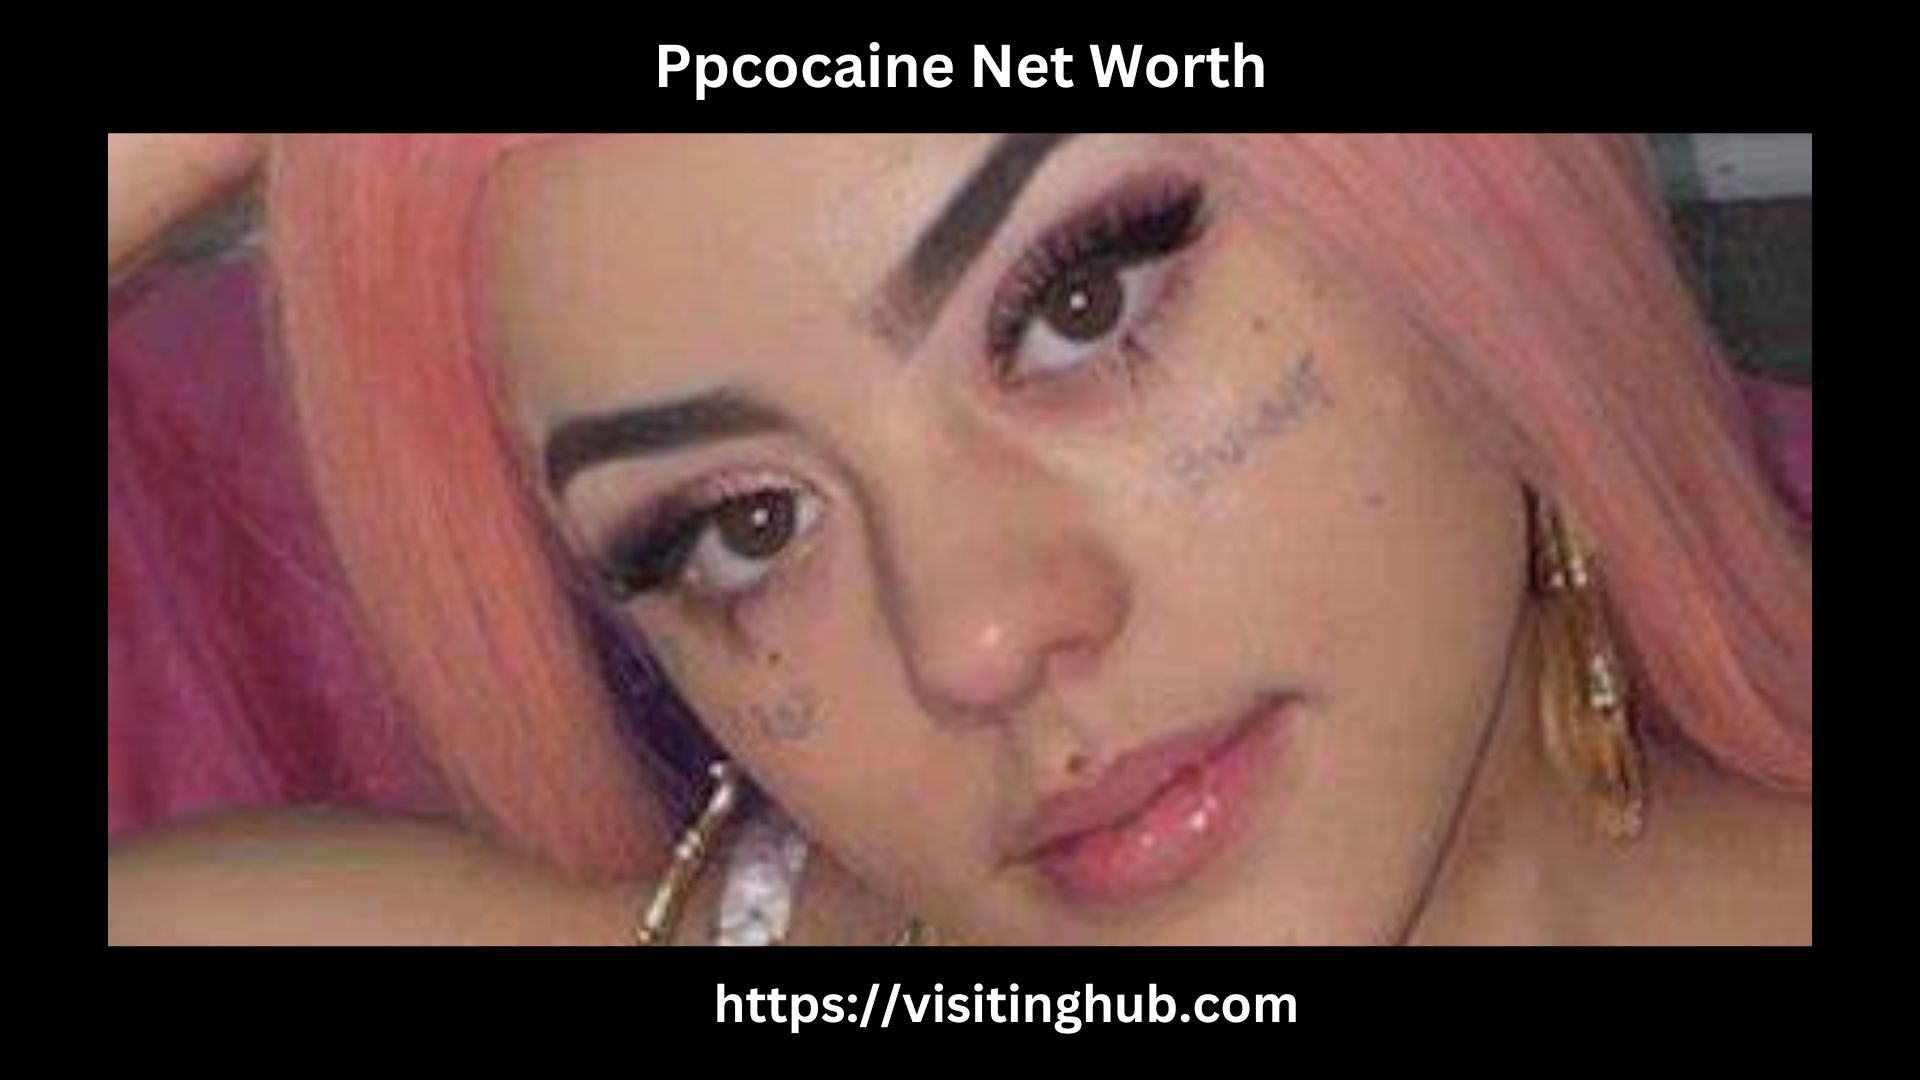 Ppcocaine Net Worth